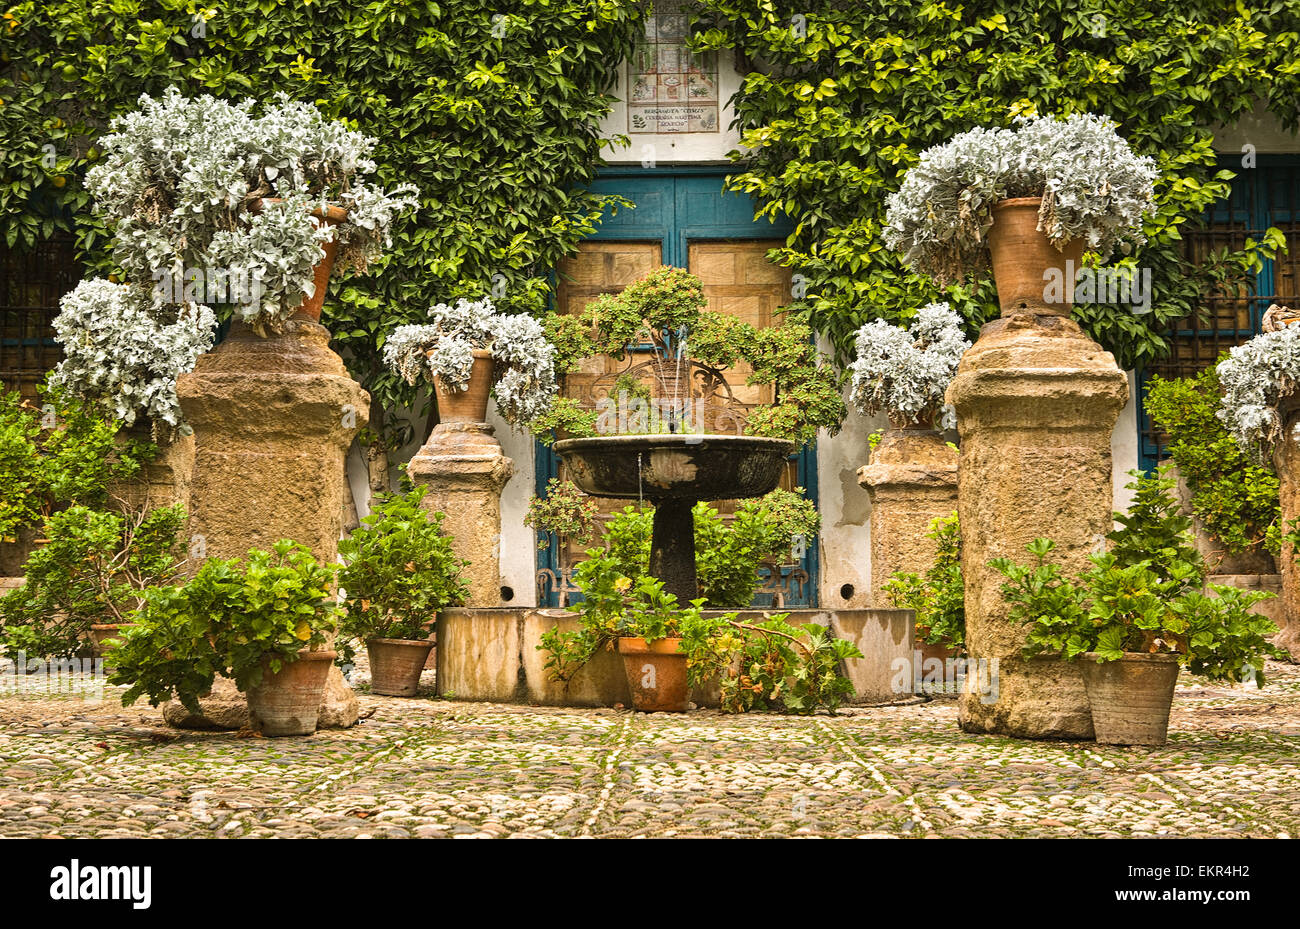 Garden Courtyard of a typical house in Cordoba, Spain Stock Photo